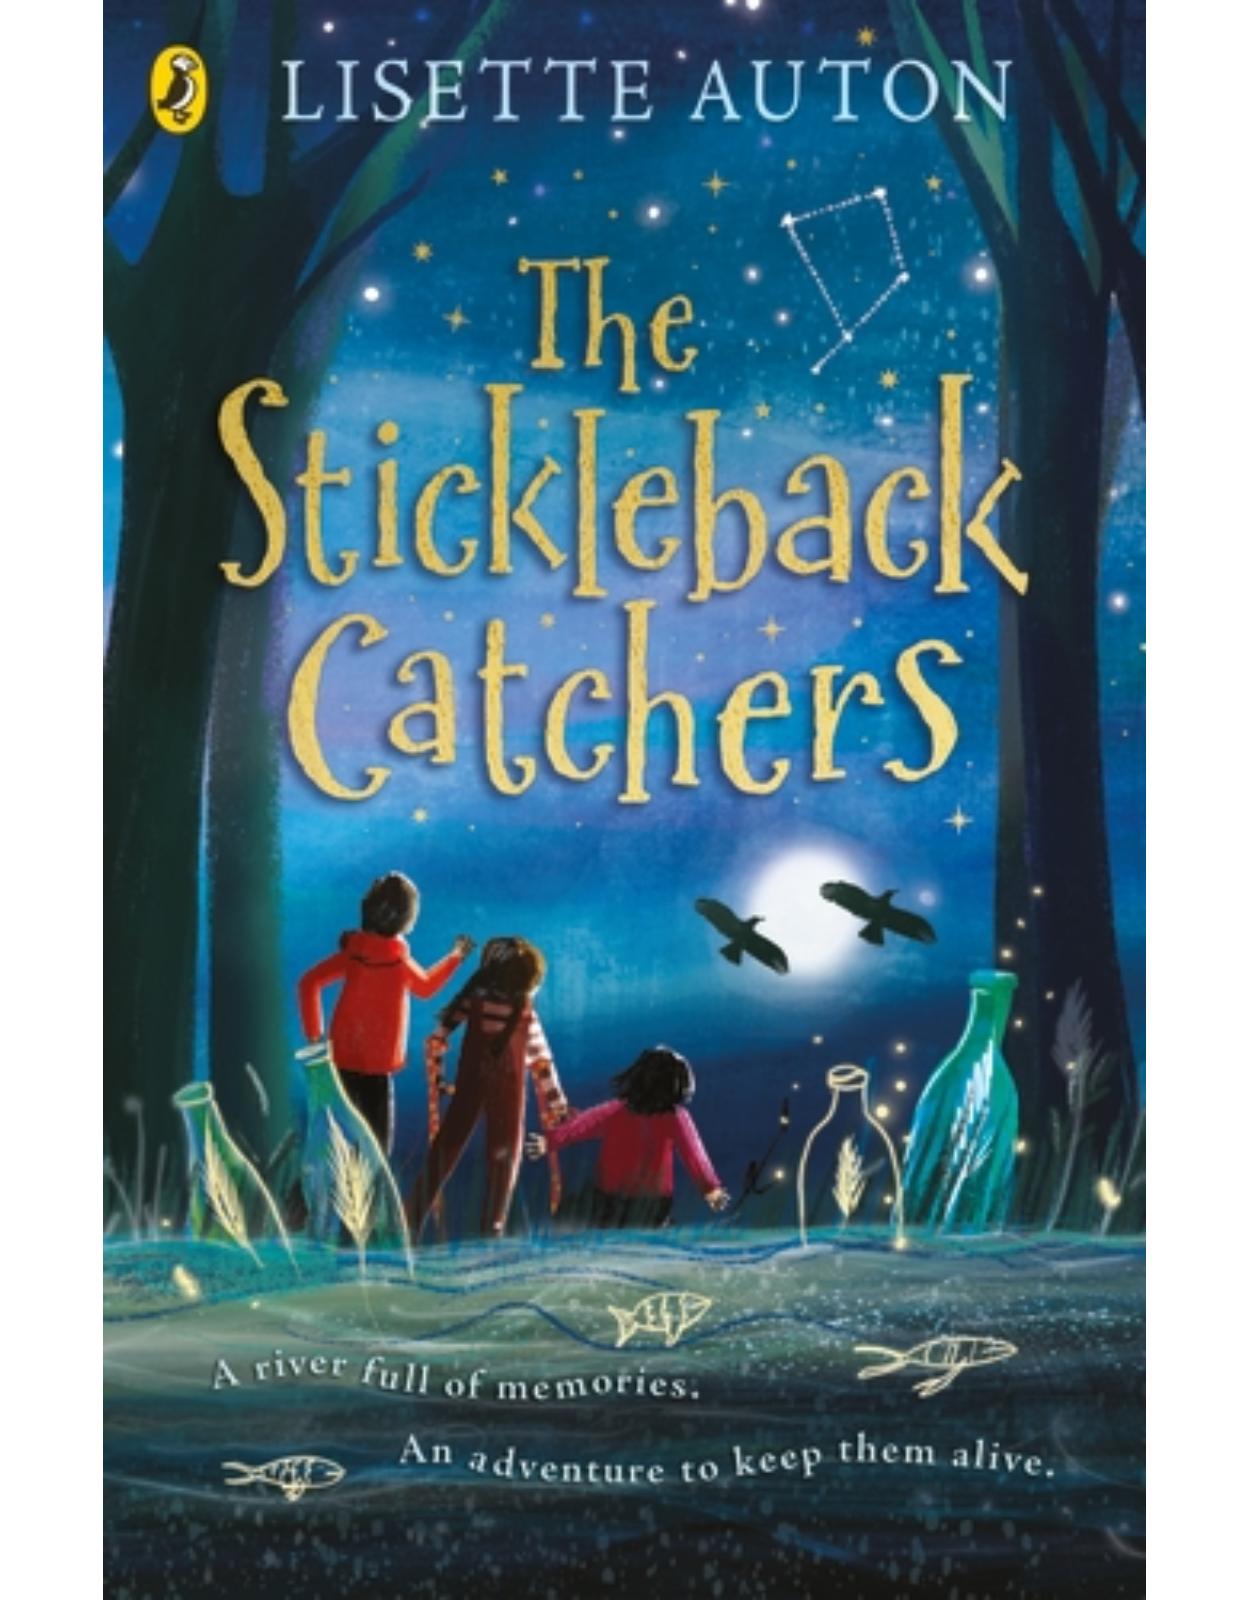 The Stickleback Catchers